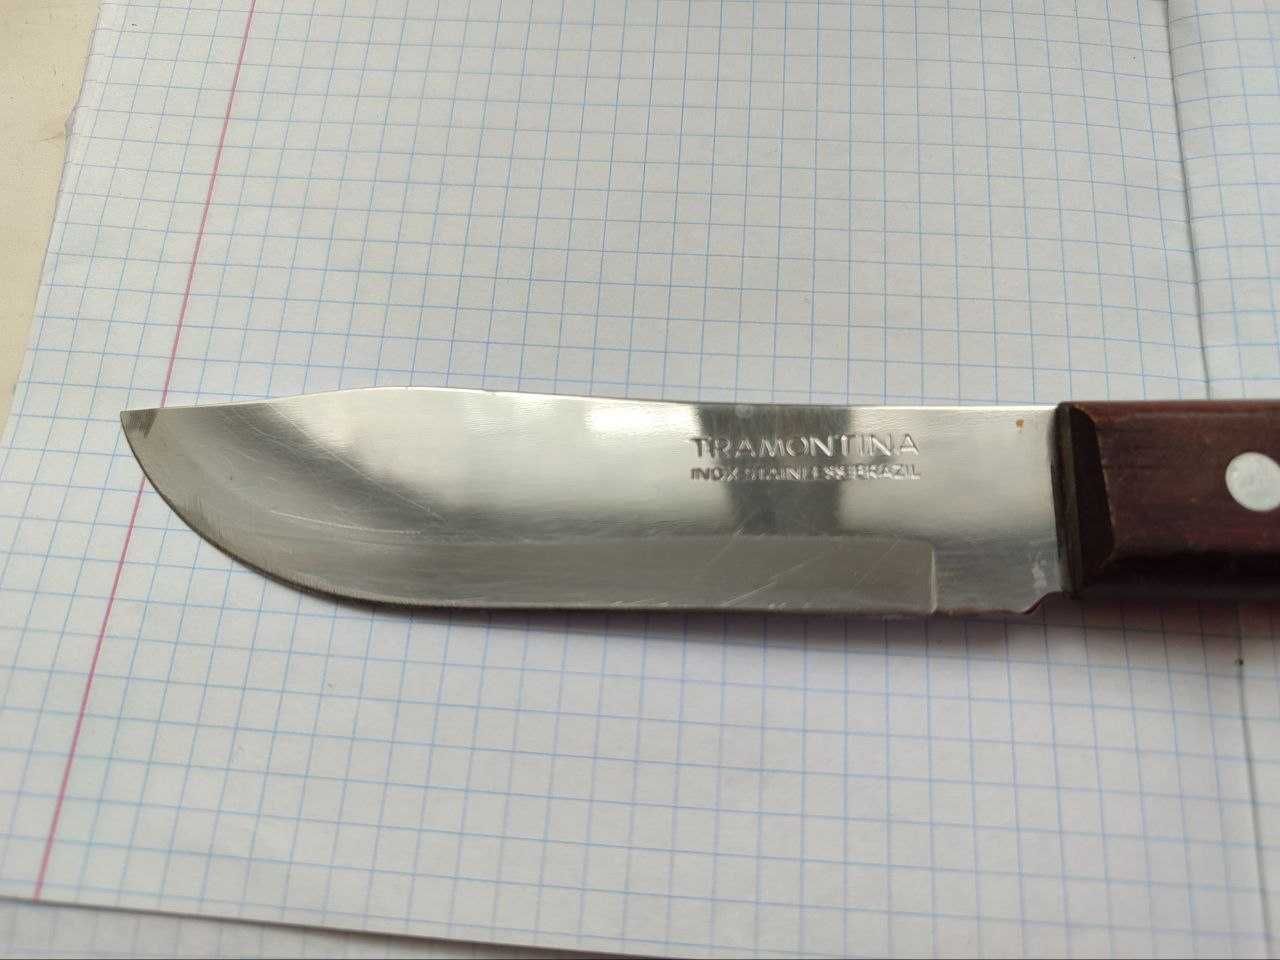 Продам нож Тramontina inox stainless brazil оригинал